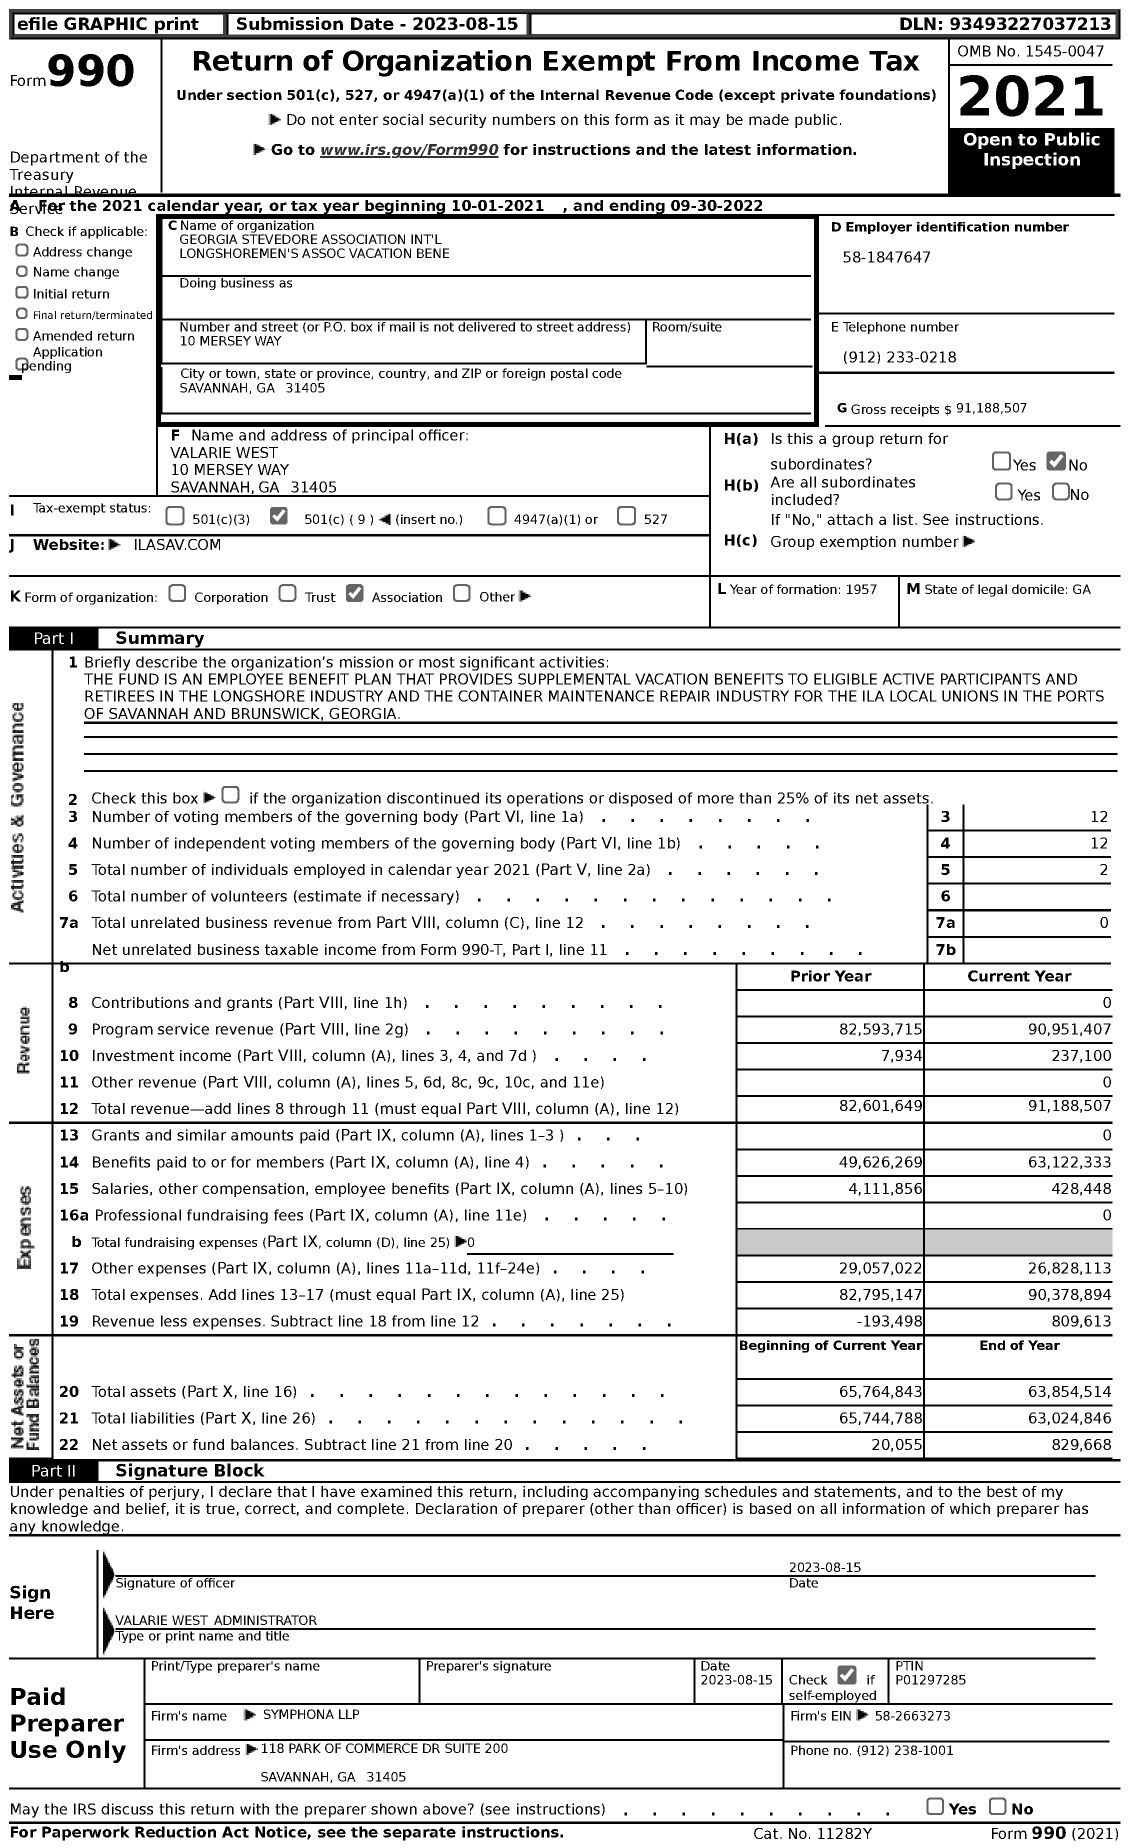 Image of first page of 2021 Form 990 for Georgia Stevedore Association International Longshoremen's Association Vacation Benefits